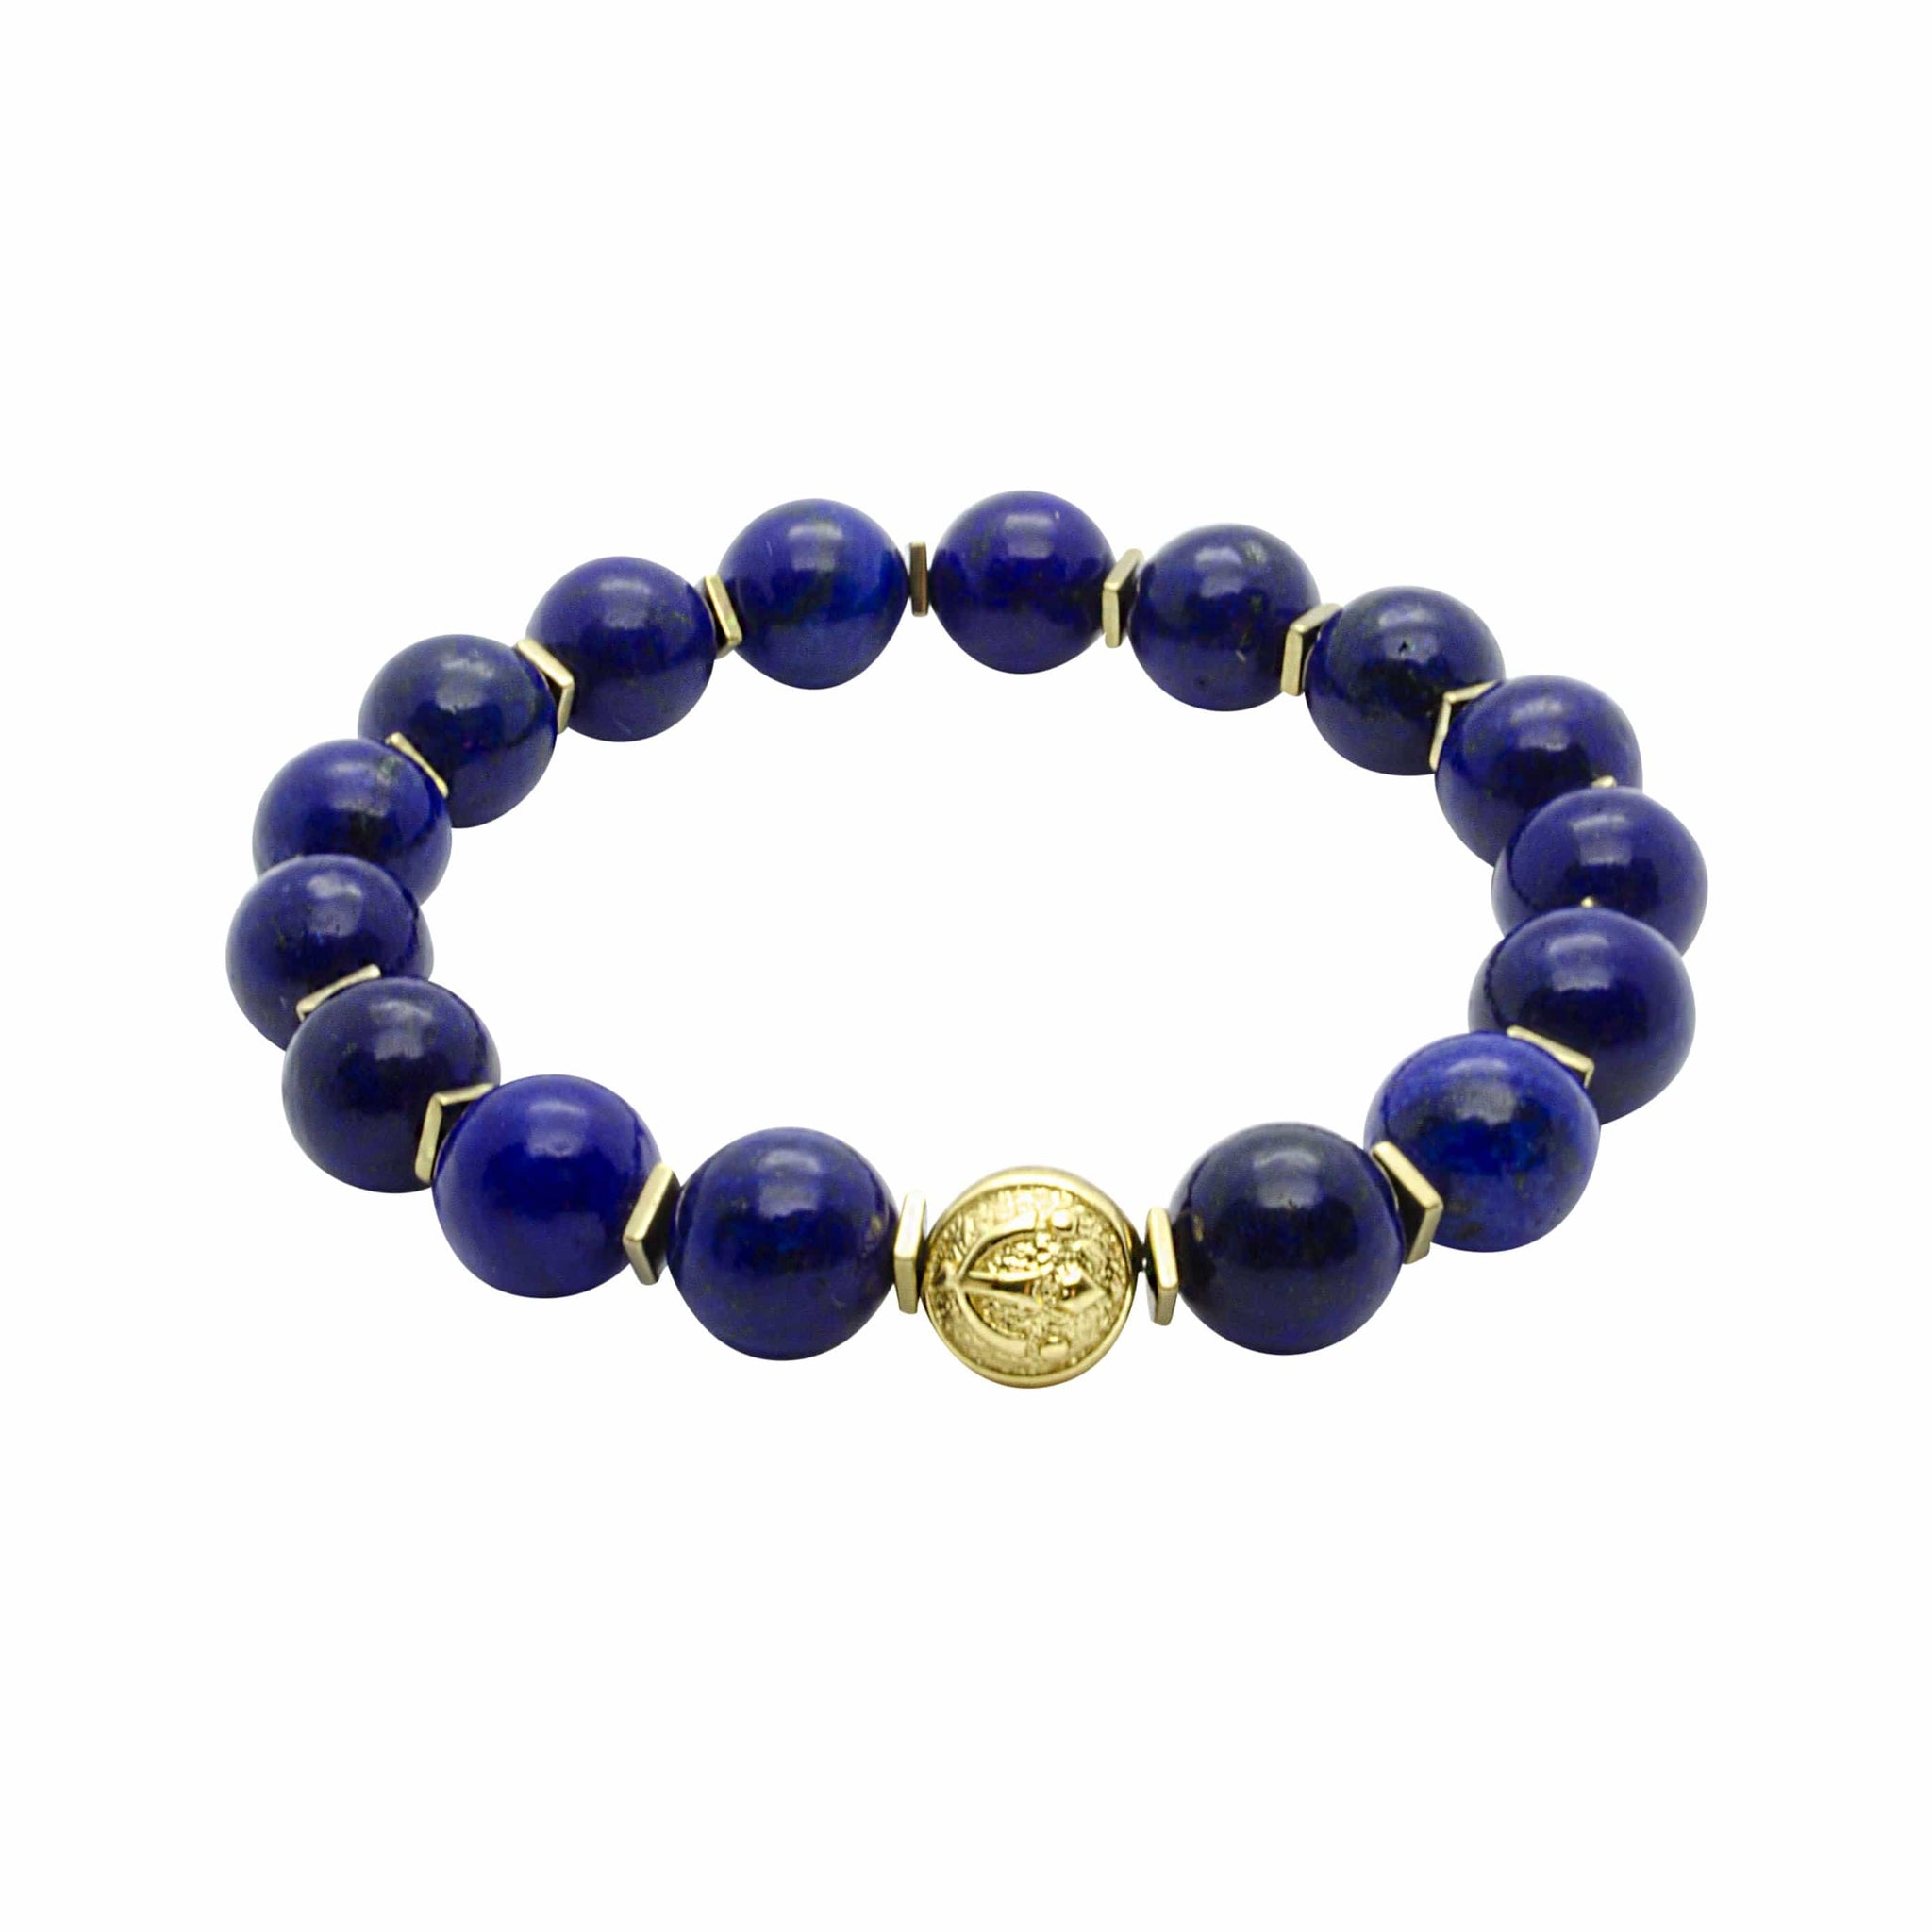 Buy Online Natural Lapis Lazuli Rondelle Shape Beads Bracelet